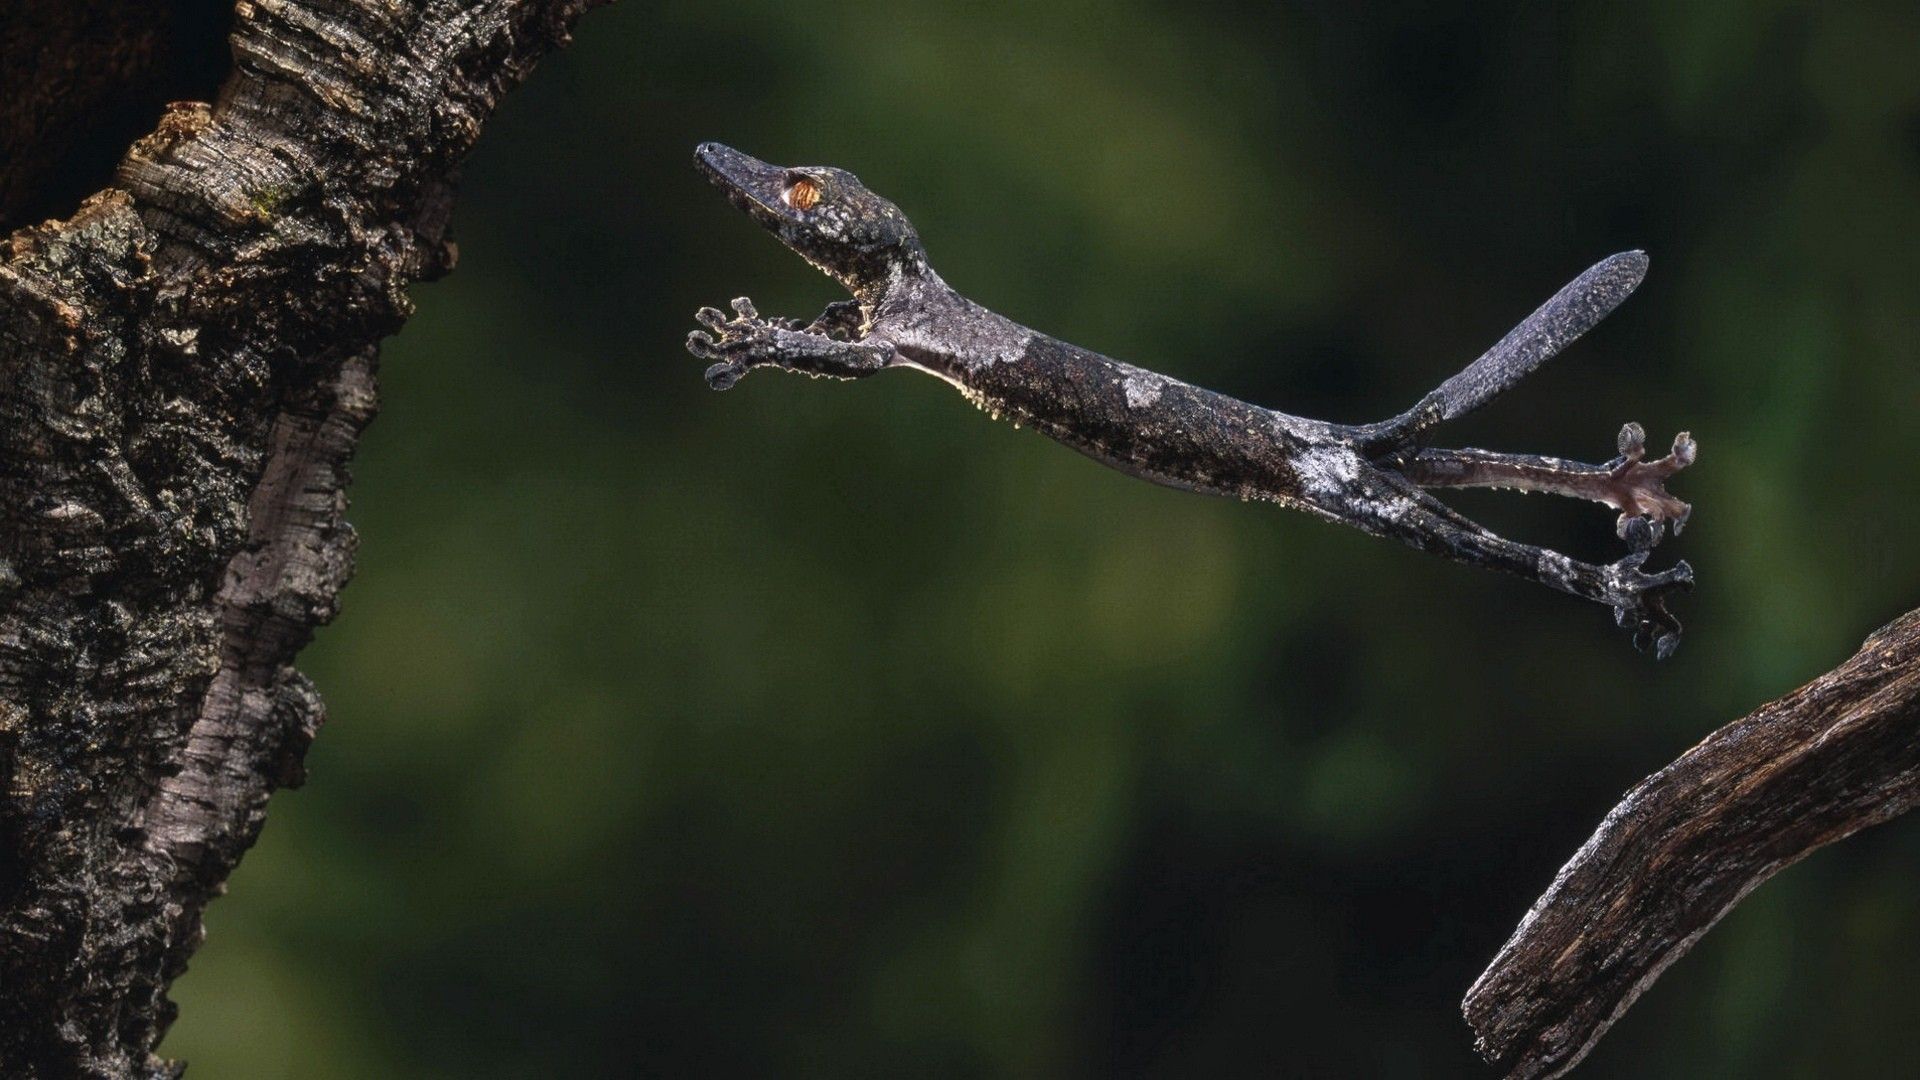 Leaf Tailed Gecko